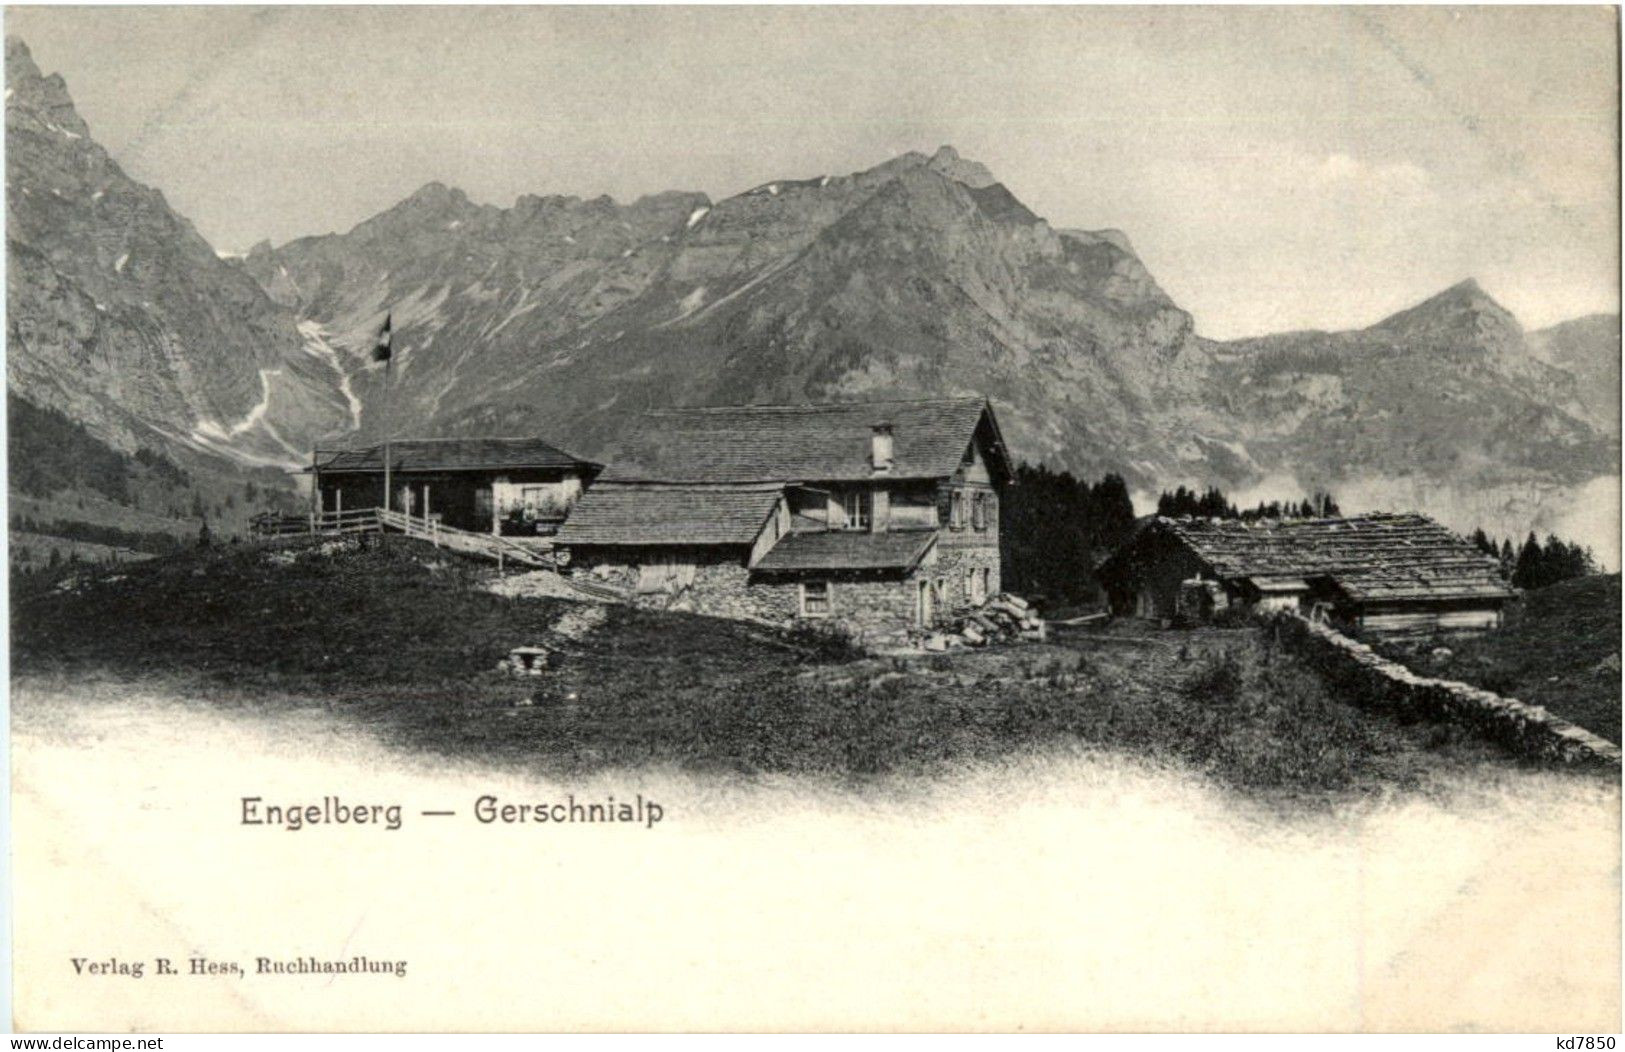 Engelberg - Gerschnialp - Engelberg